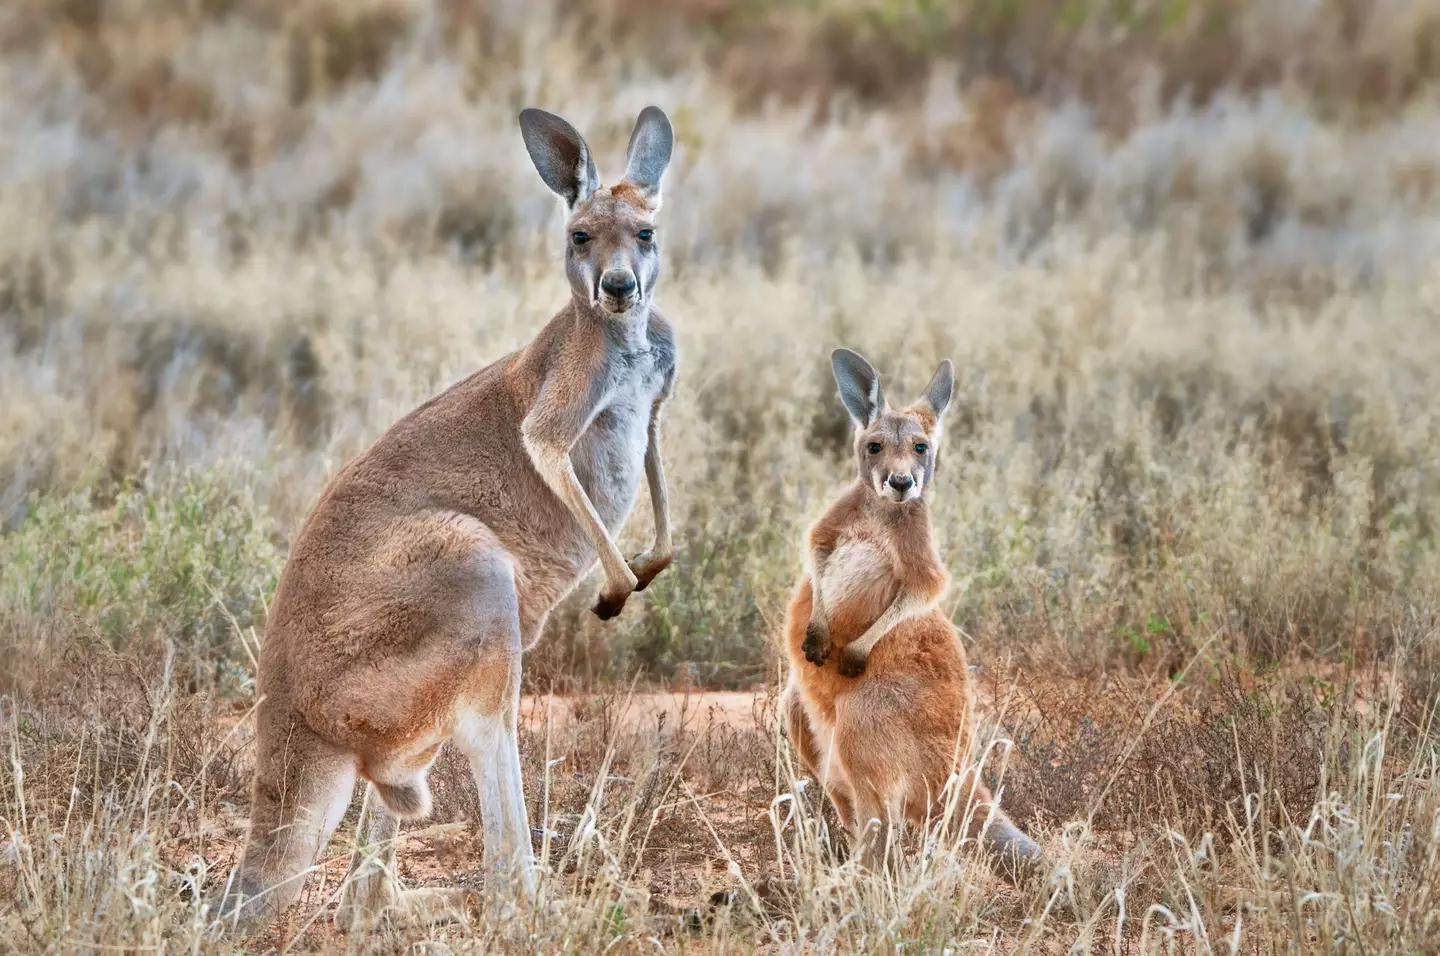 A Red Kangaroo with her joey.